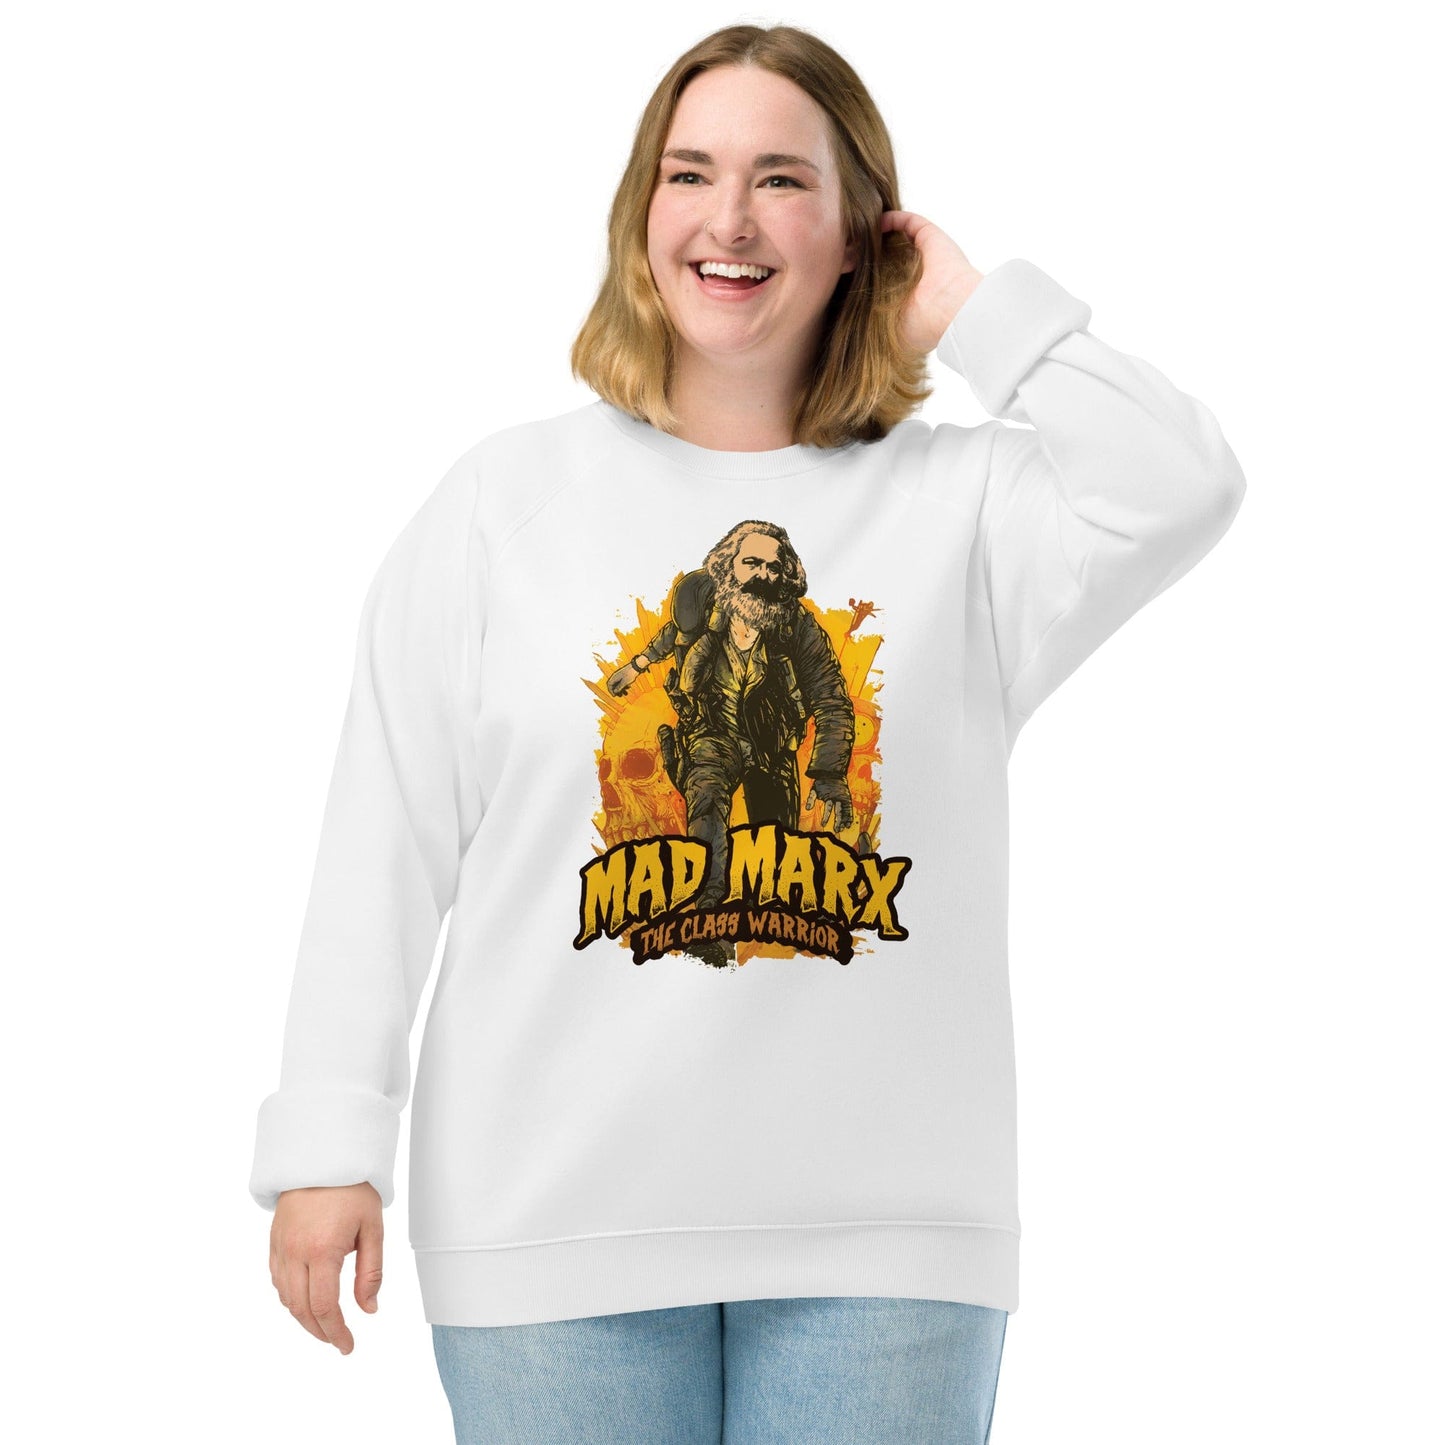 Mad Marx - The Class Warrior - Eco Sweatshirt